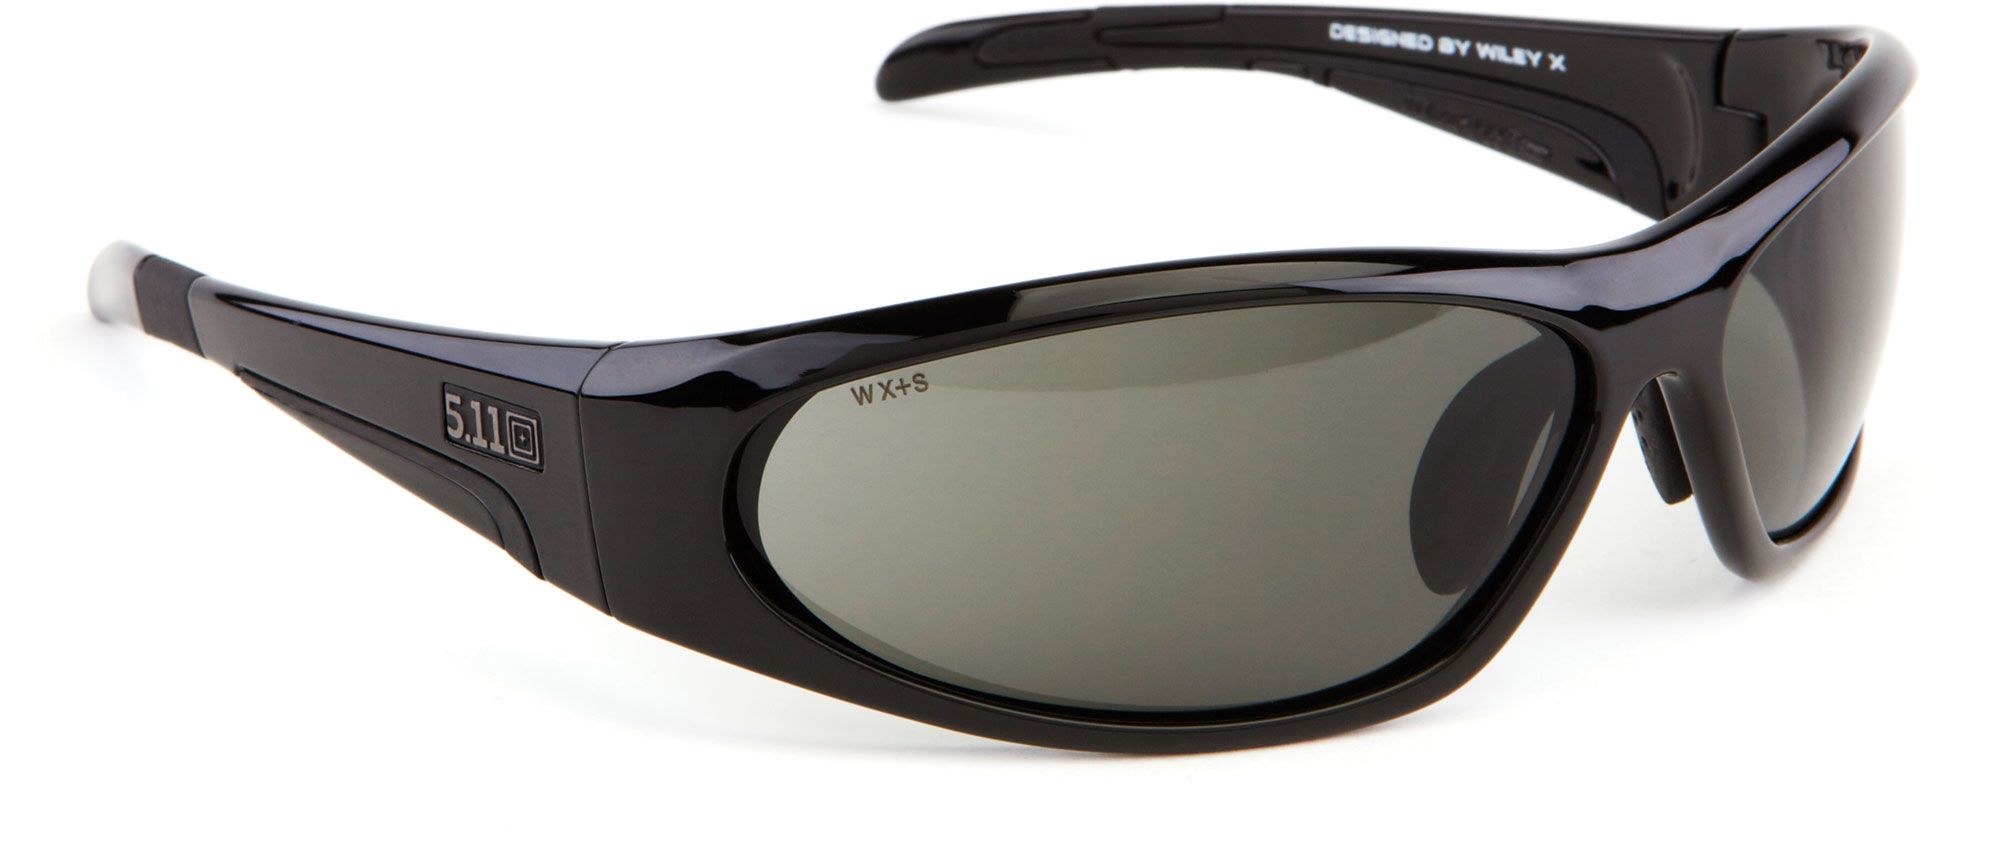 5.11 Tactical Sunglasses / Eyewear